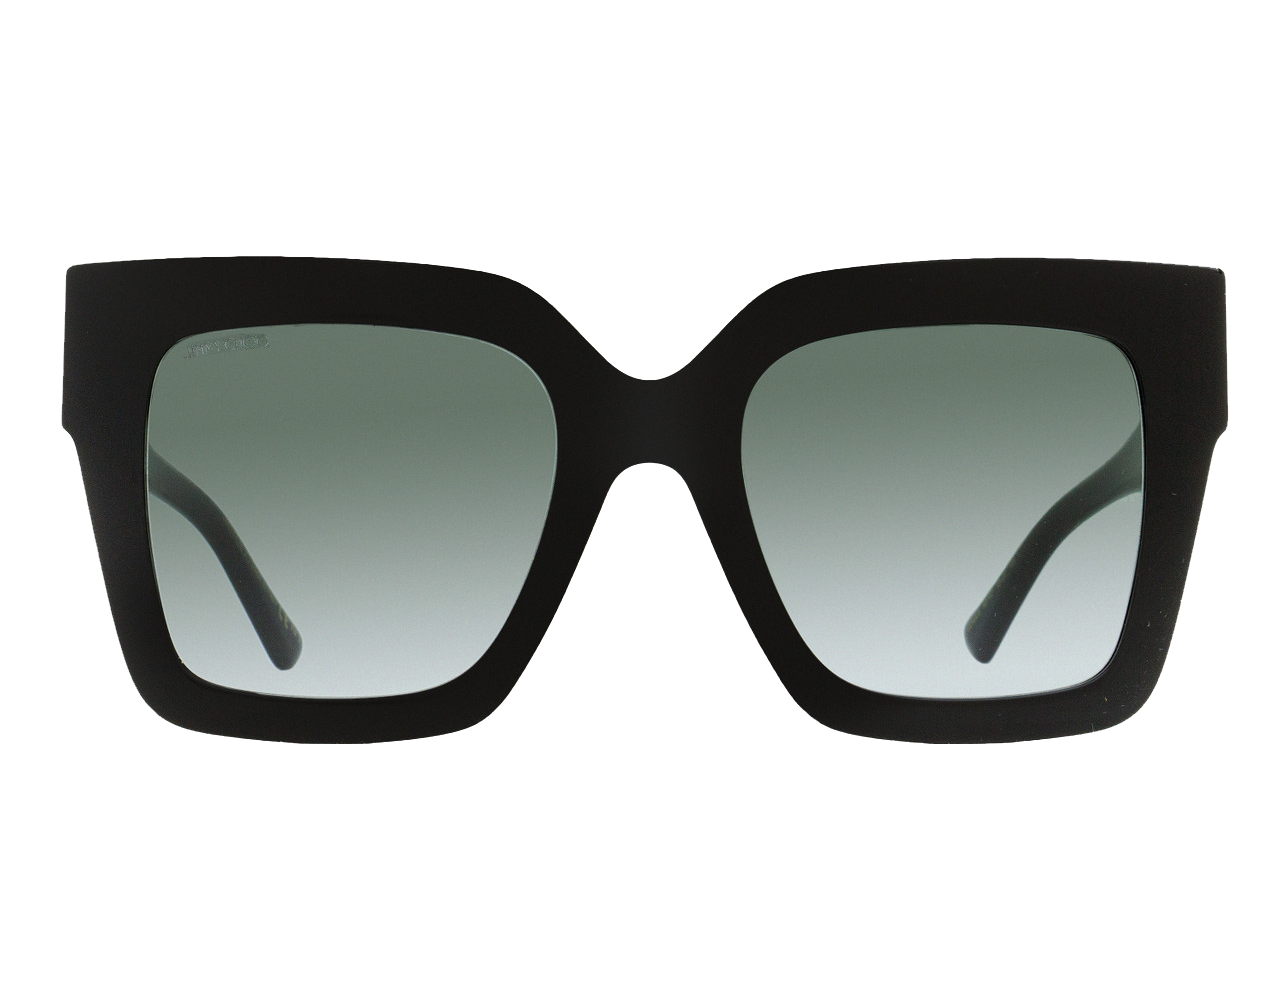 Jimmy Choo Sunglasses Jimmy Choo Sunglasses EDNA/S 8079O 52mm Eyeglasses Eyewear UK USA Australia 